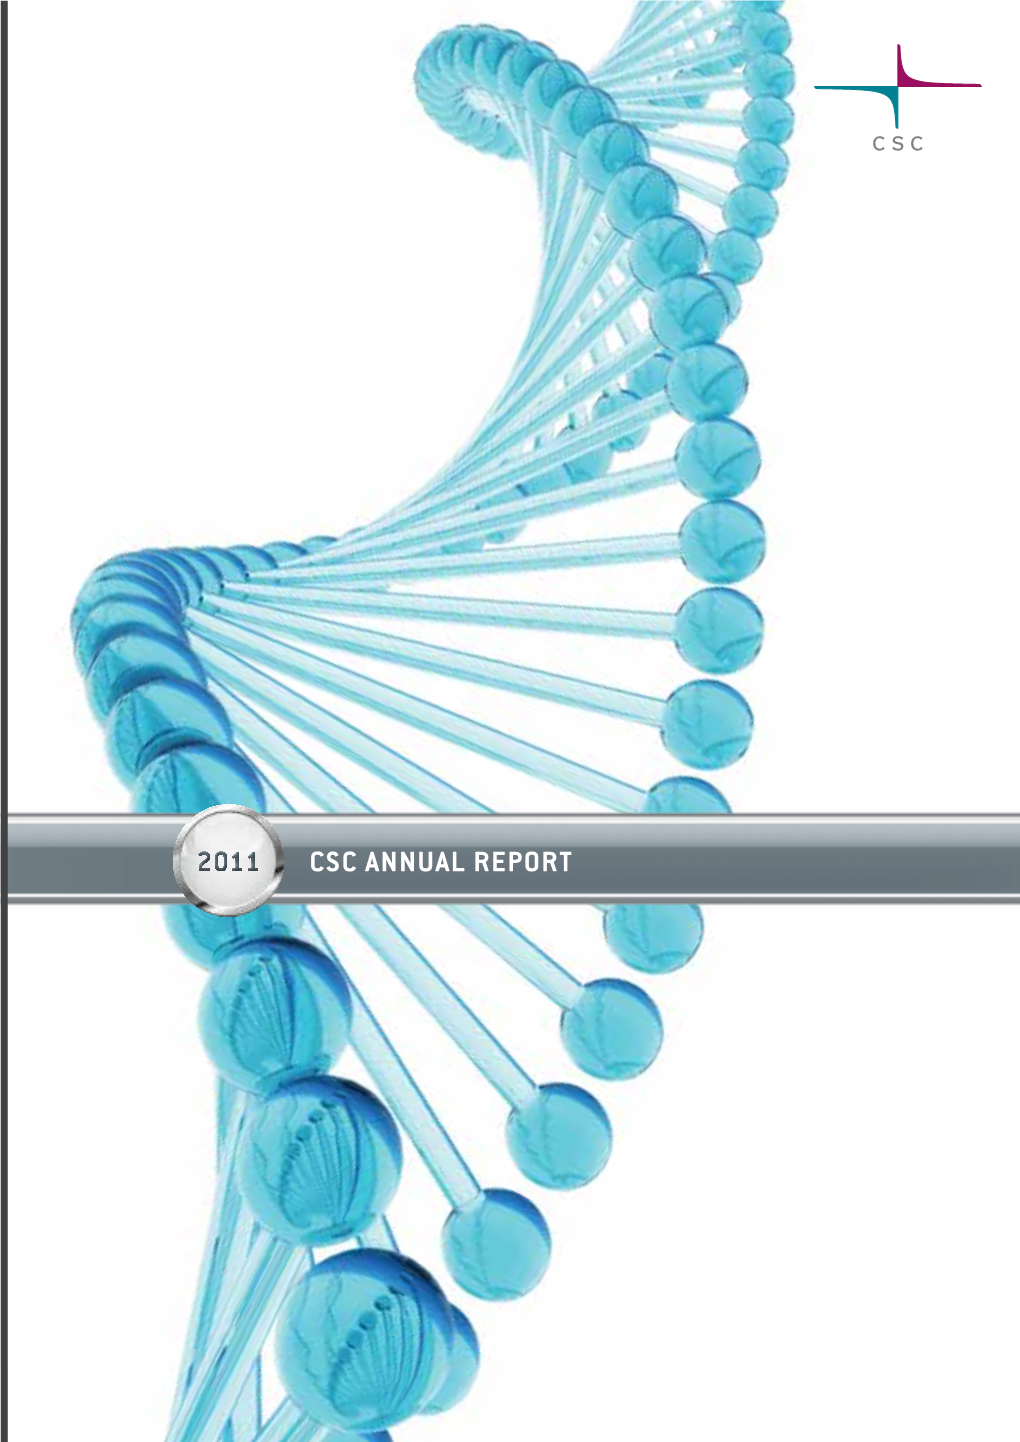 CSC Annual Report Csc ANNUAL REPORT 2011